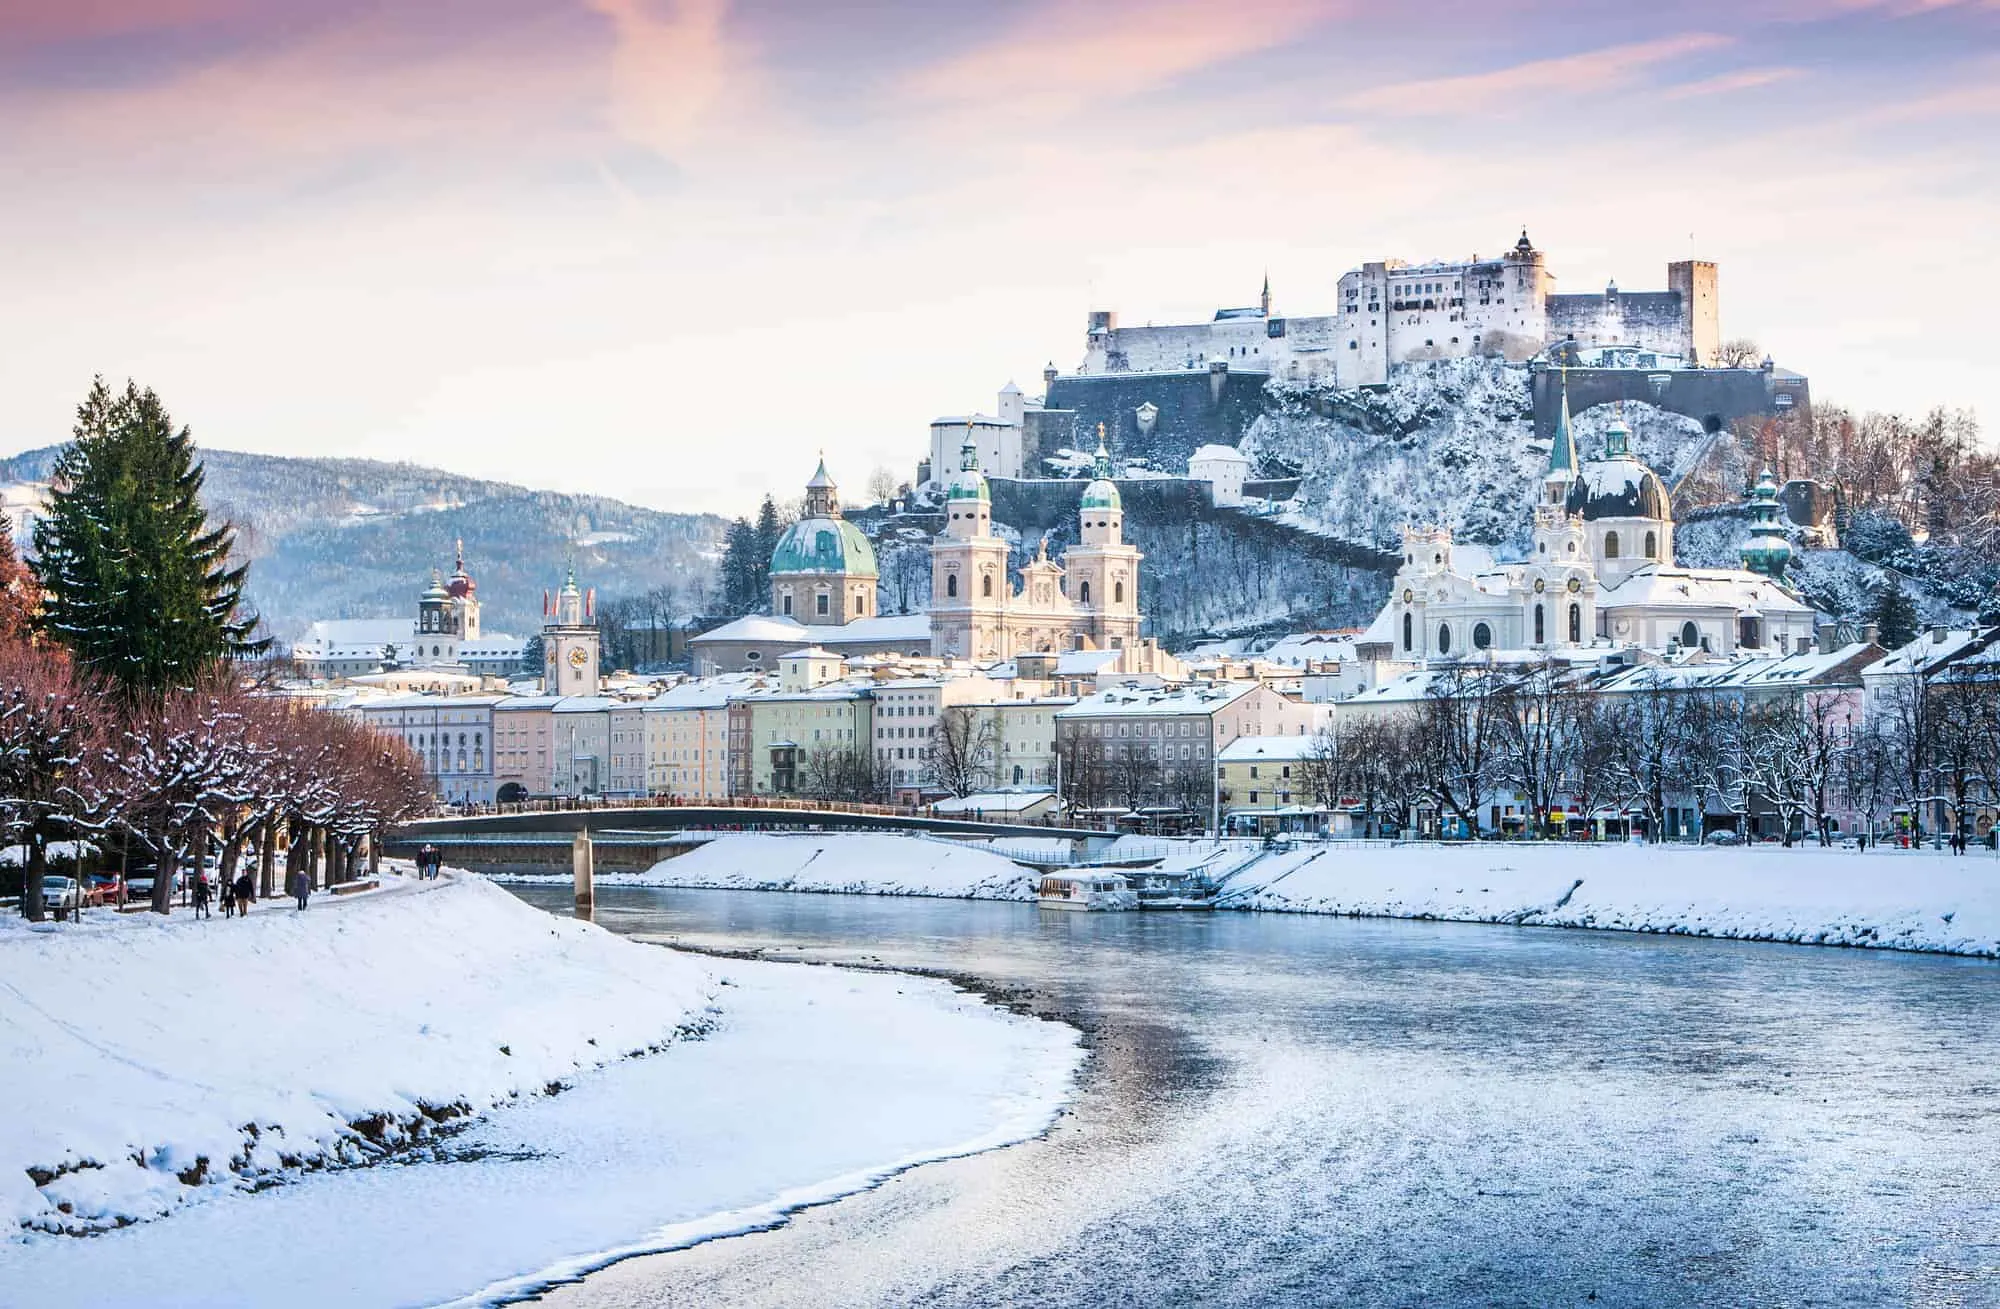 Salzburg, Austria - A beautiful city to visit in December